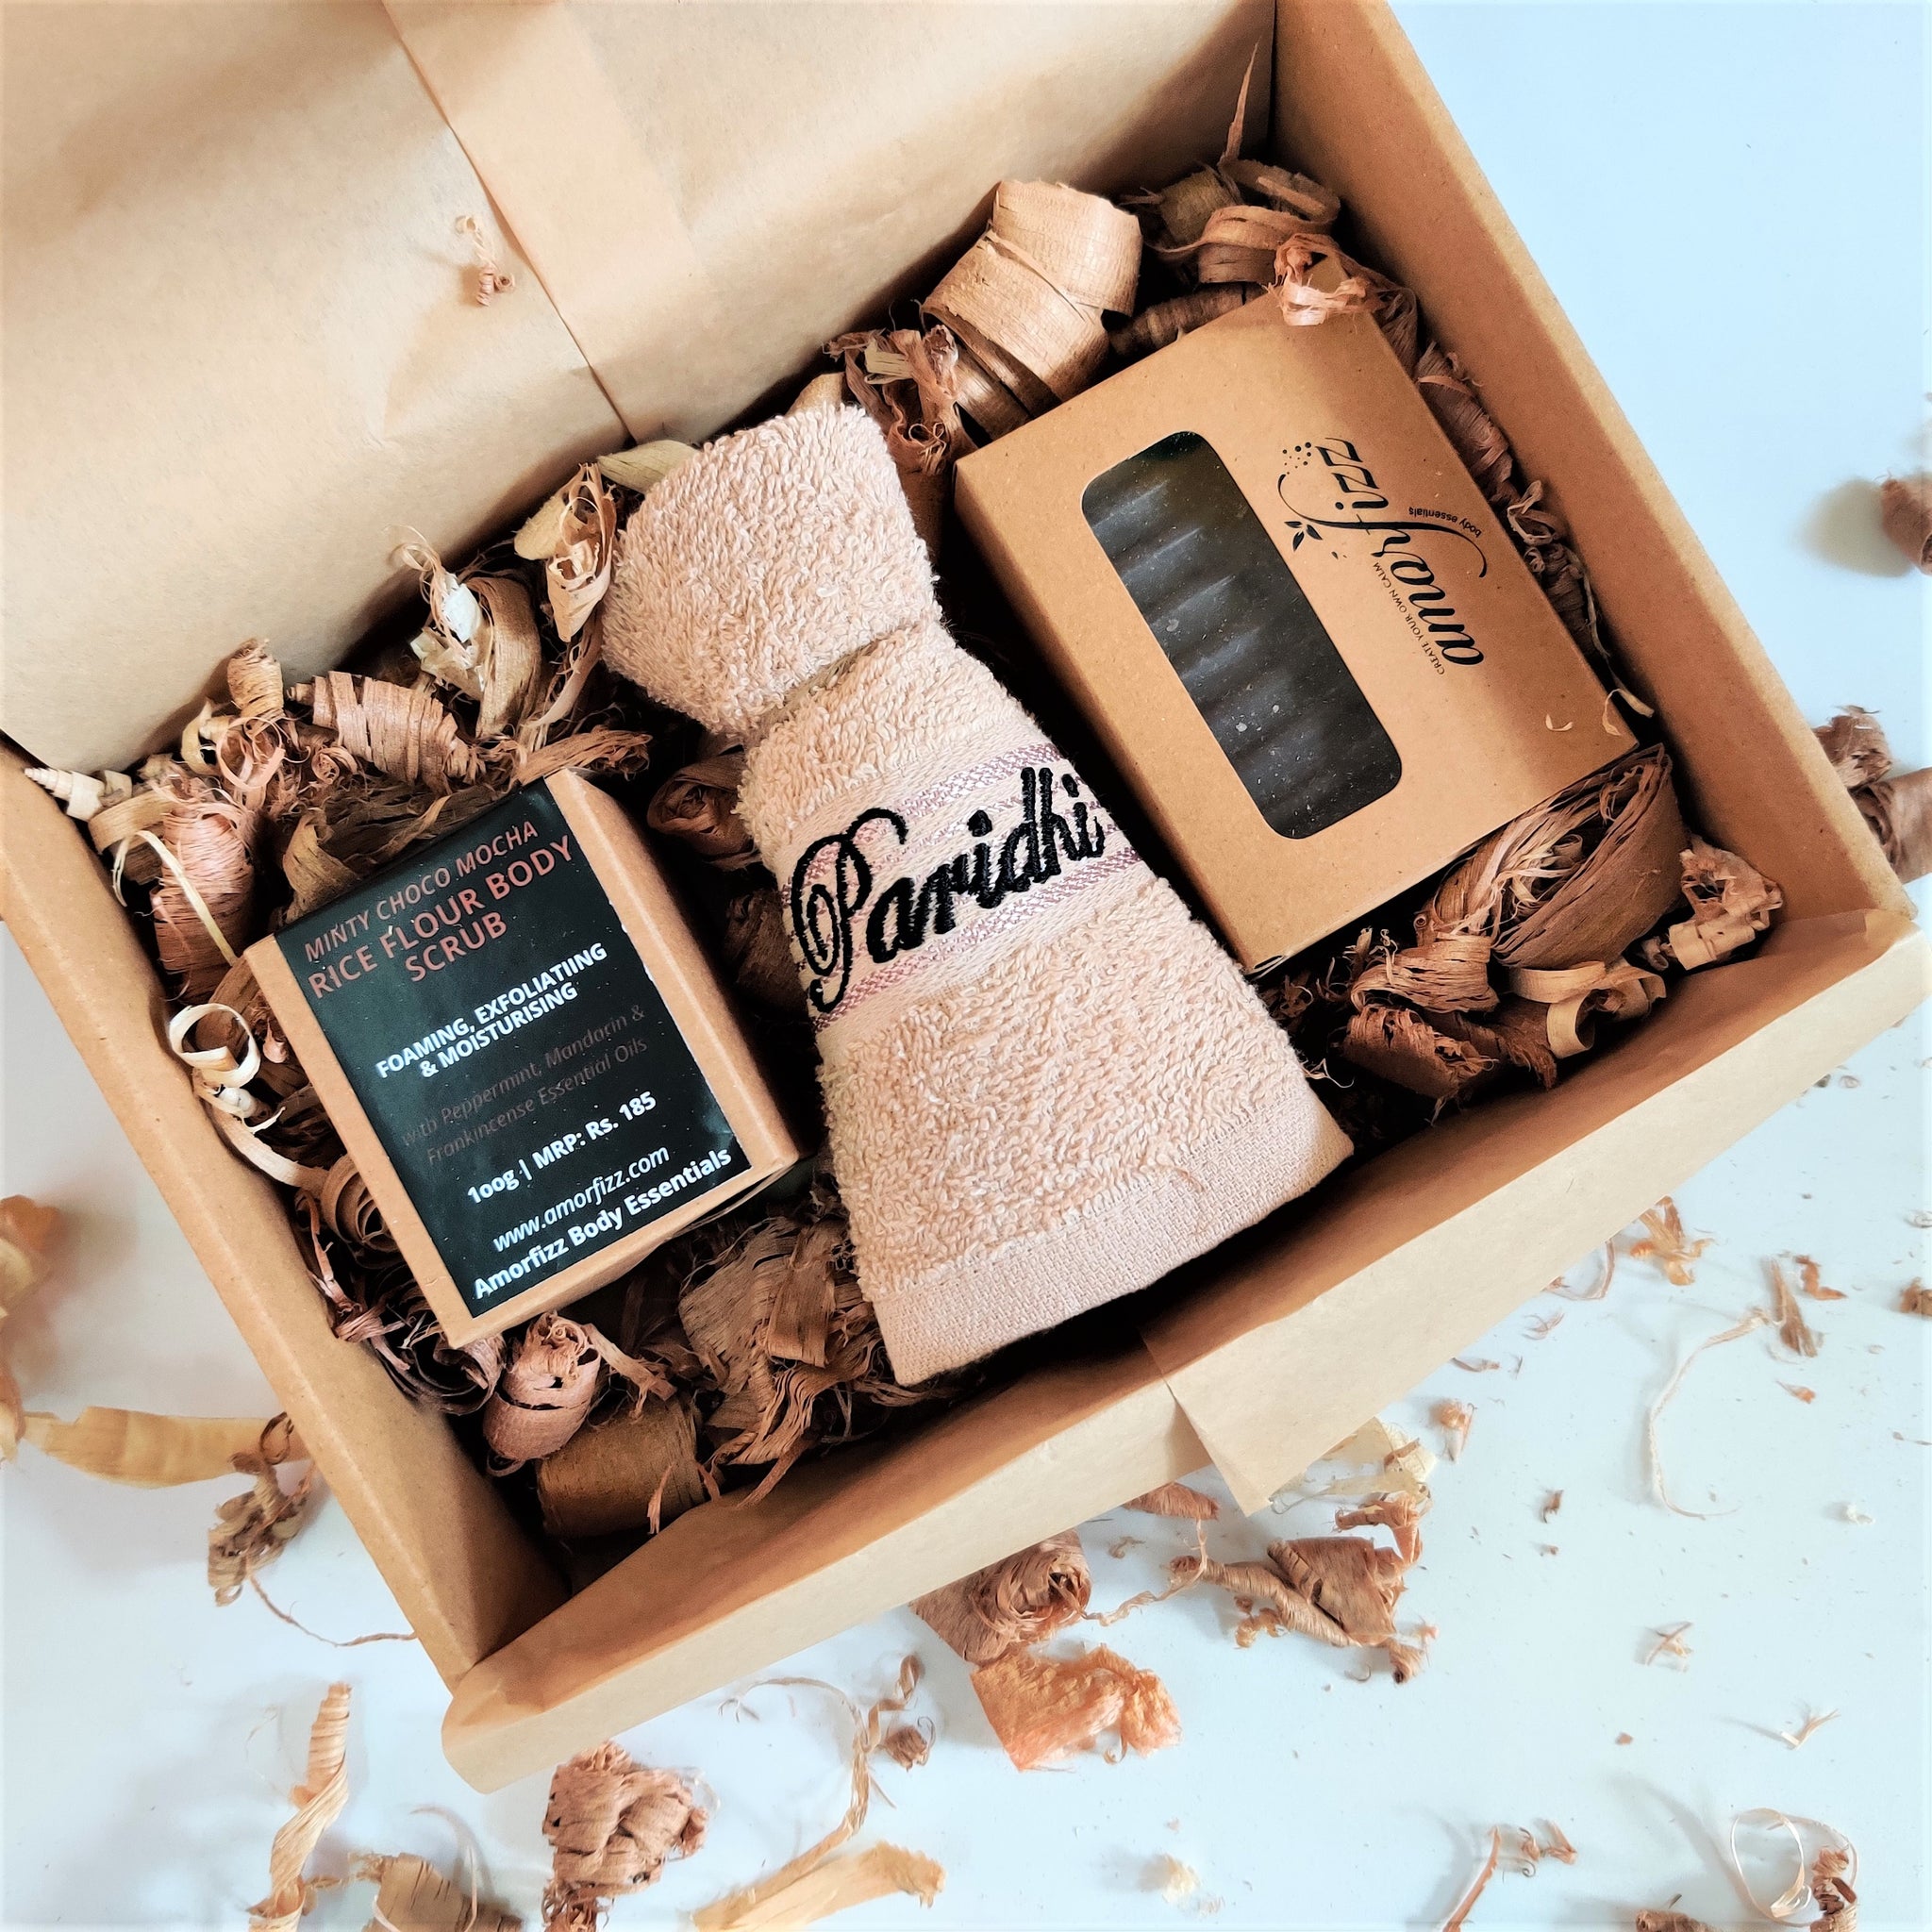 dantoy BIO Coffee Set in Gift Box